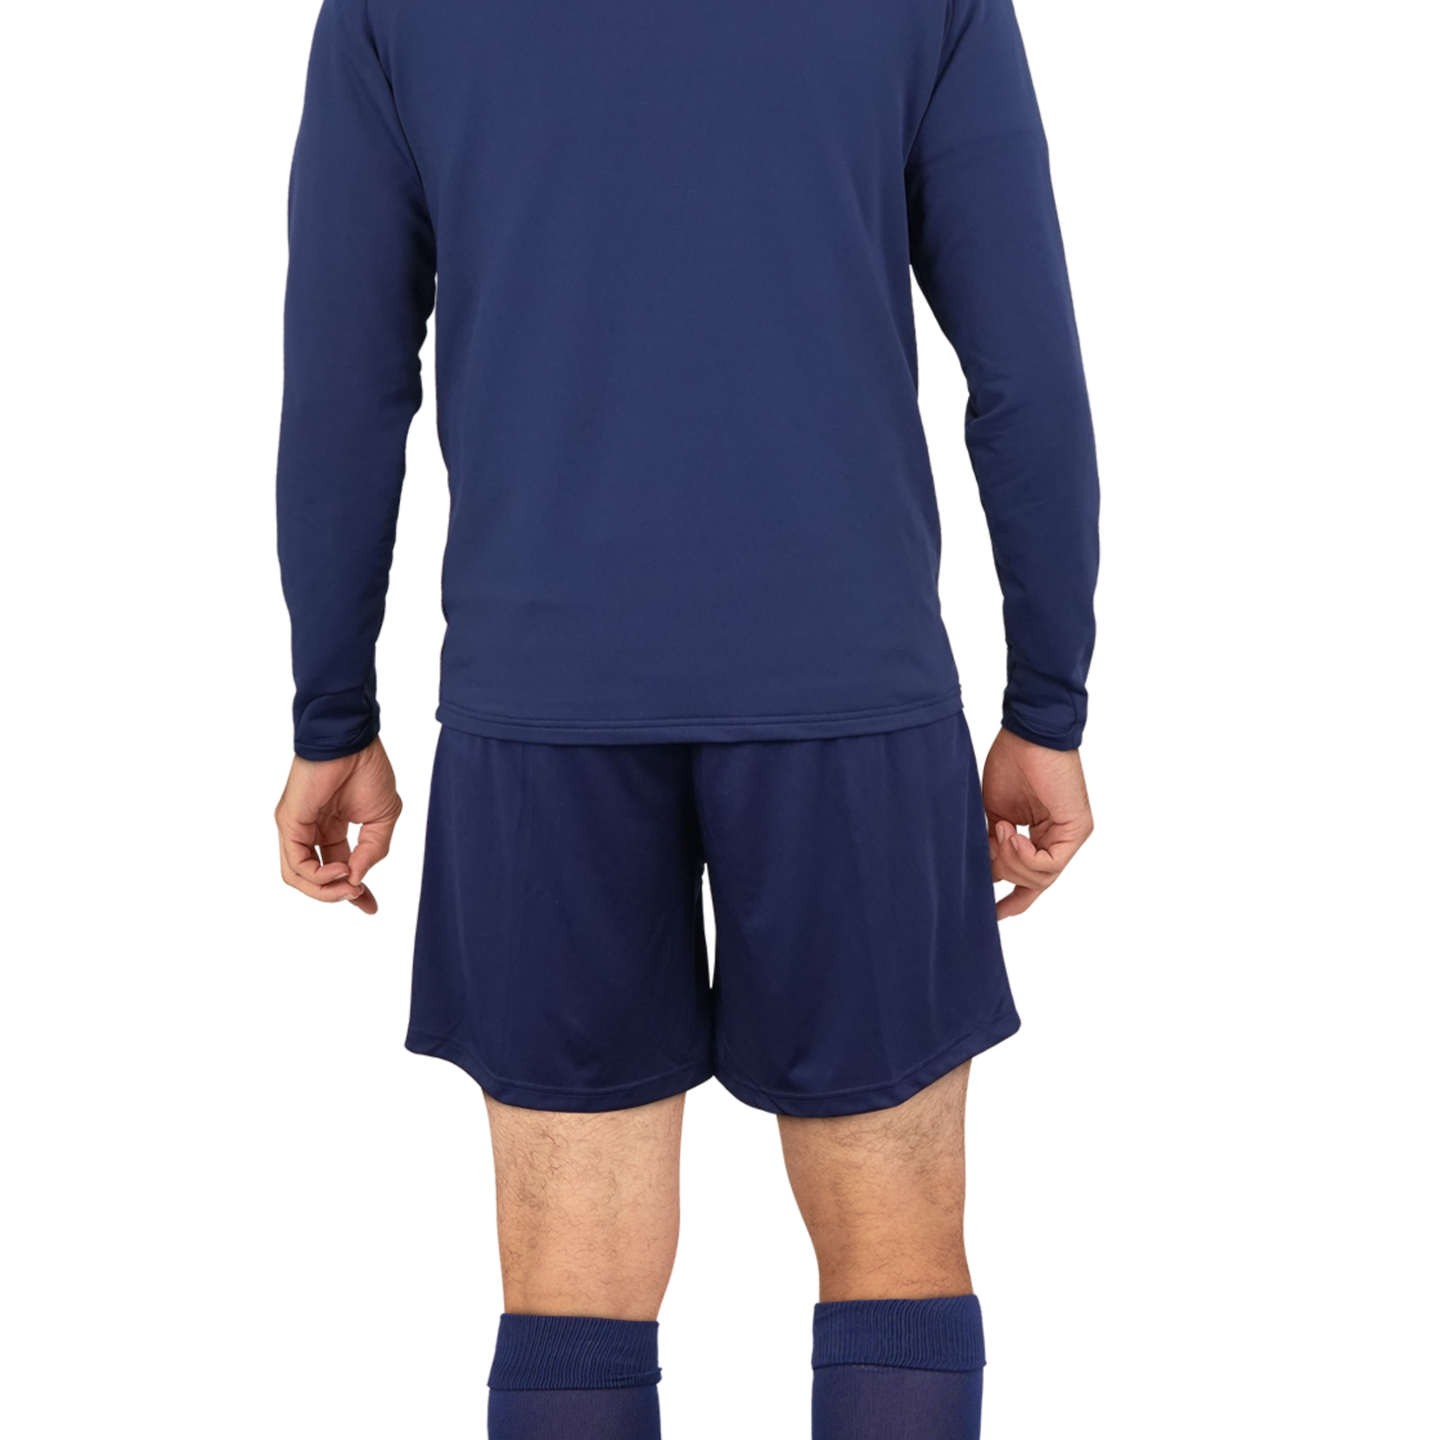 Essential Football Shorts - Navy